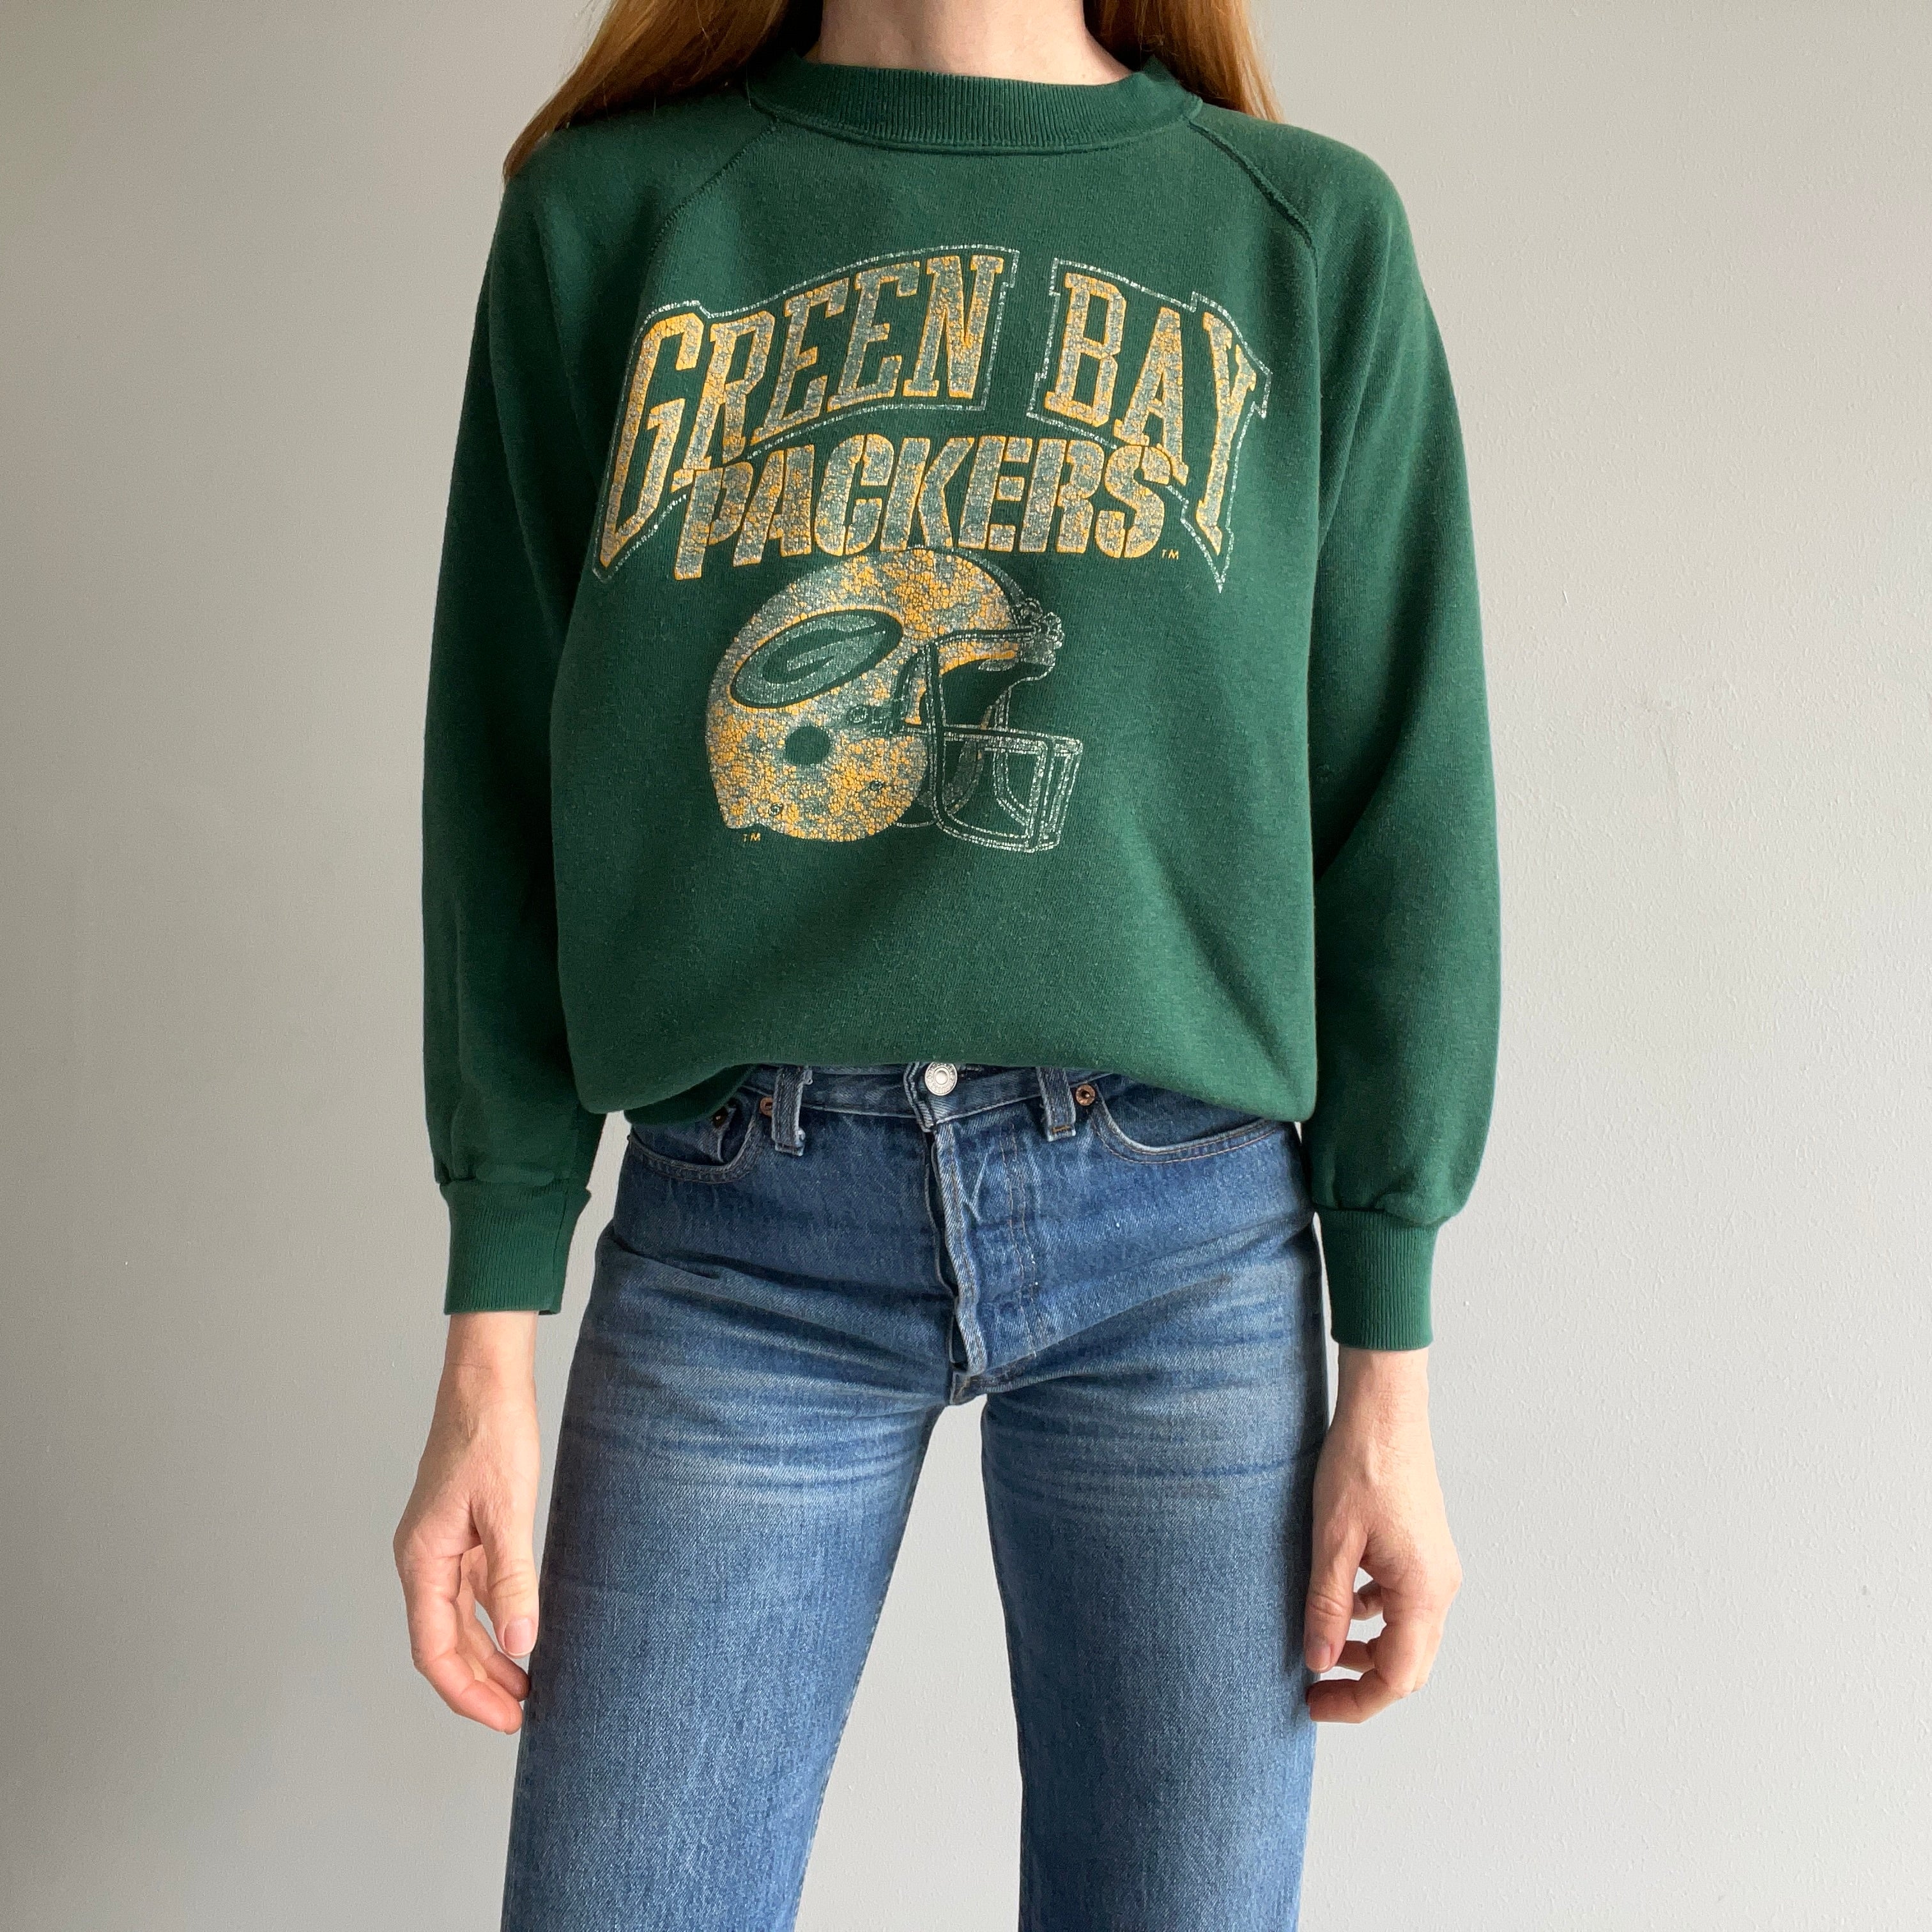 green bay packers vintage crewneck